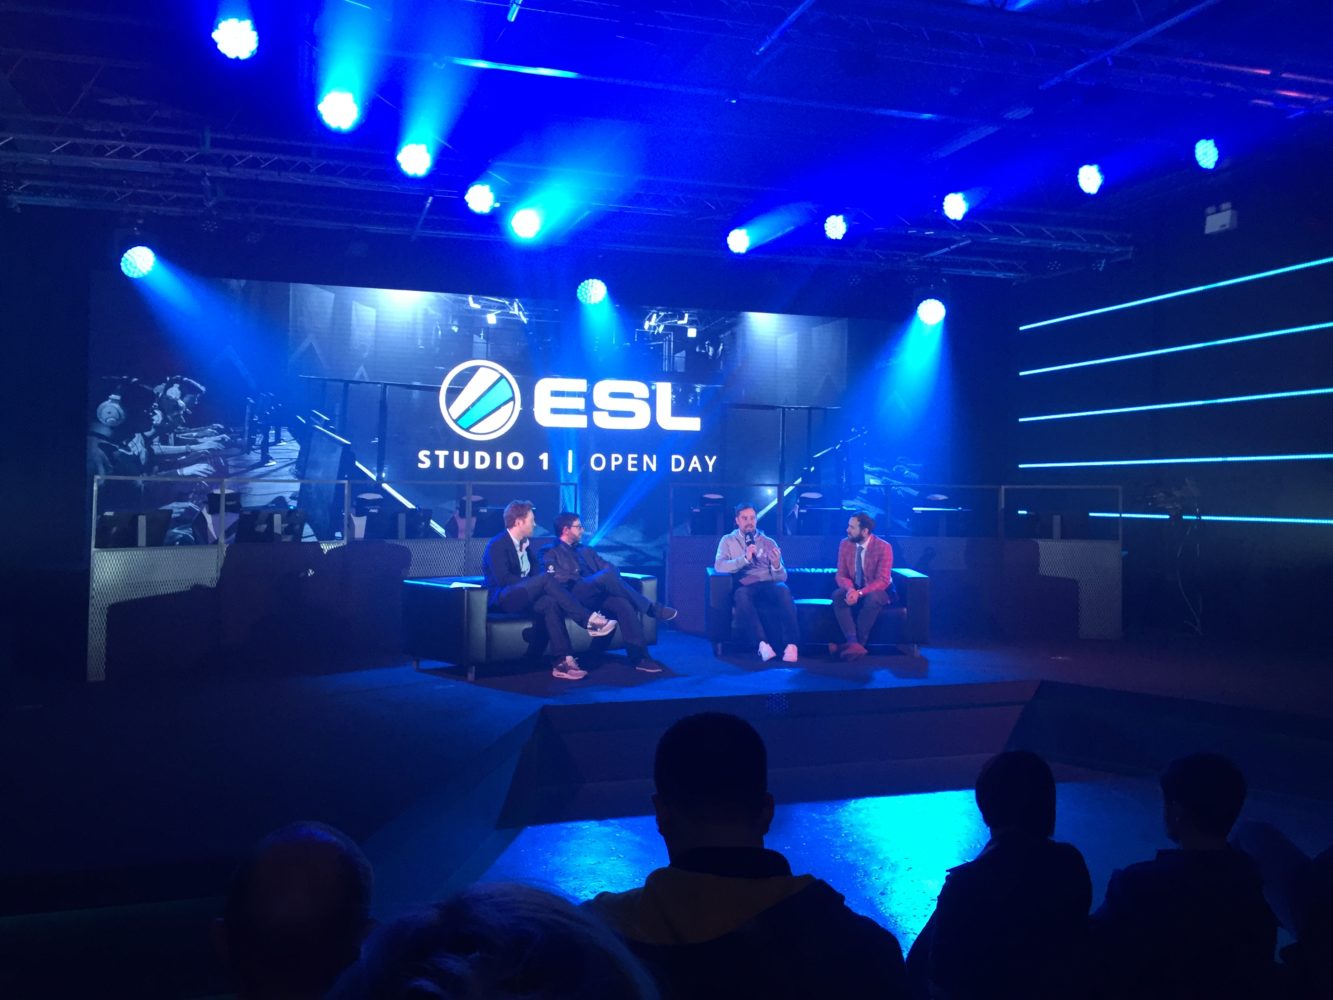 A new era for UK esports: Behind the scenes at ESL UK’s new Studio 1